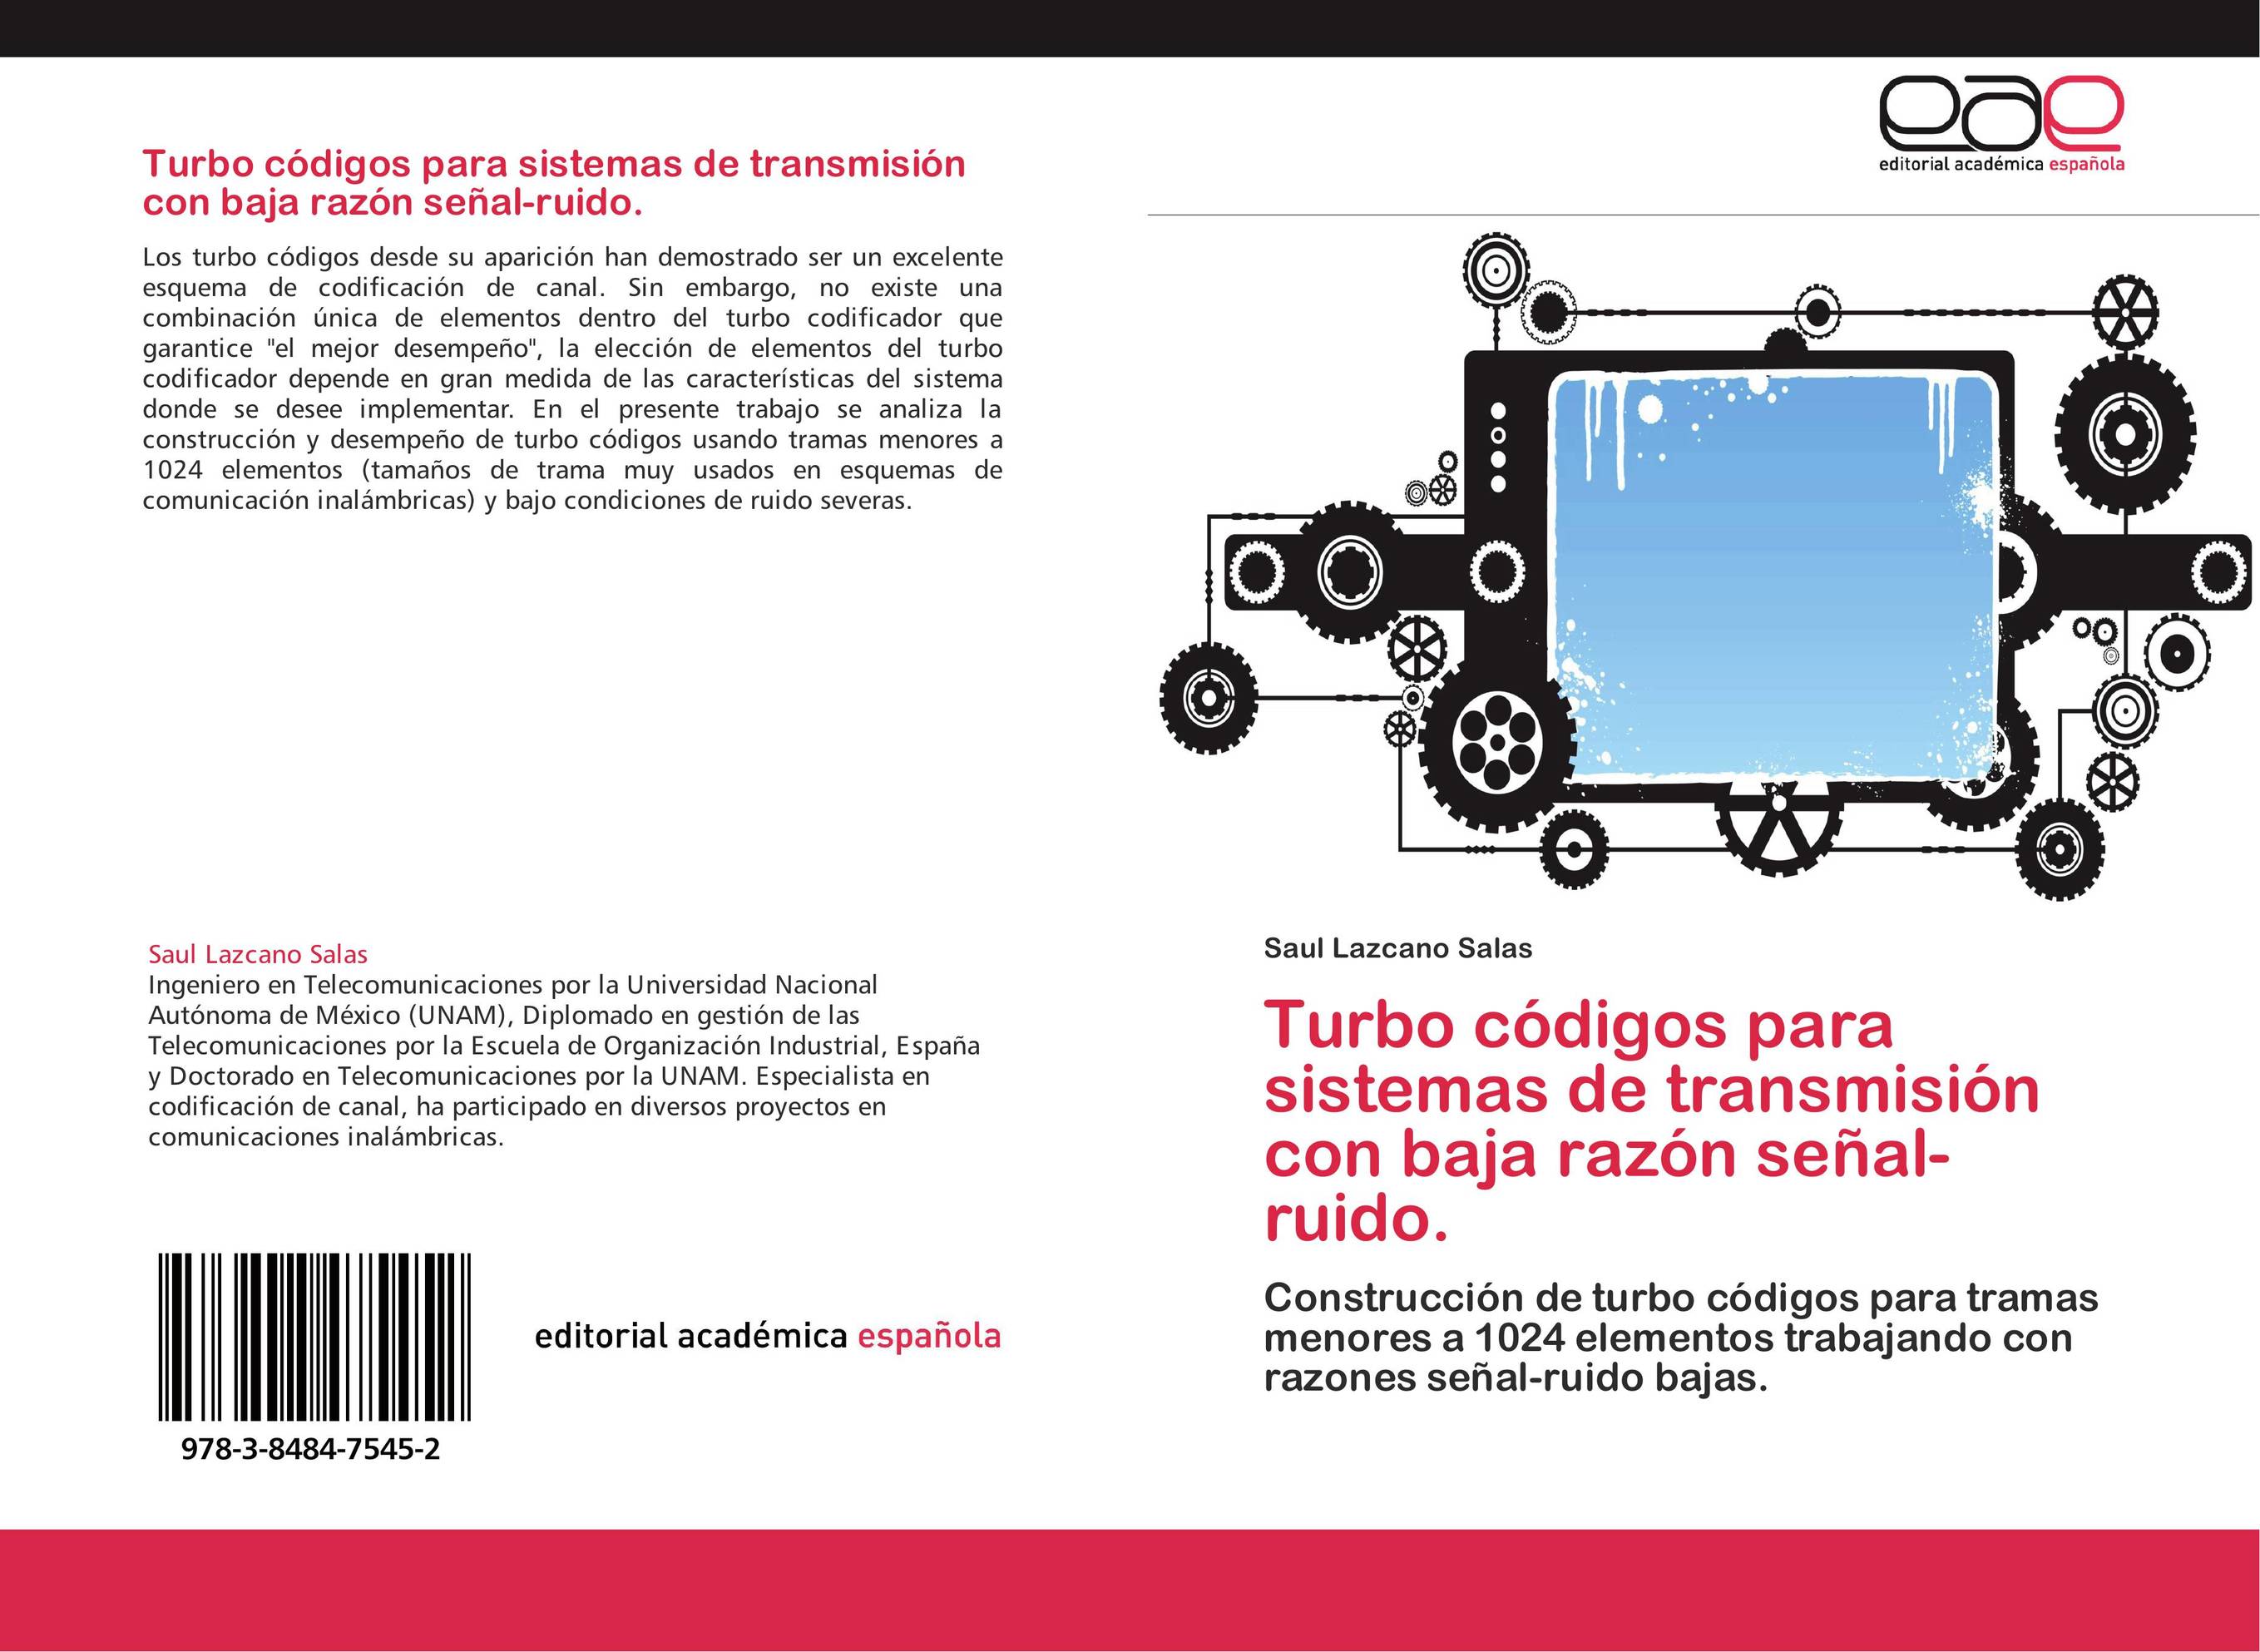 Turbo códigos para sistemas de transmisión con baja razón señal-ruido.